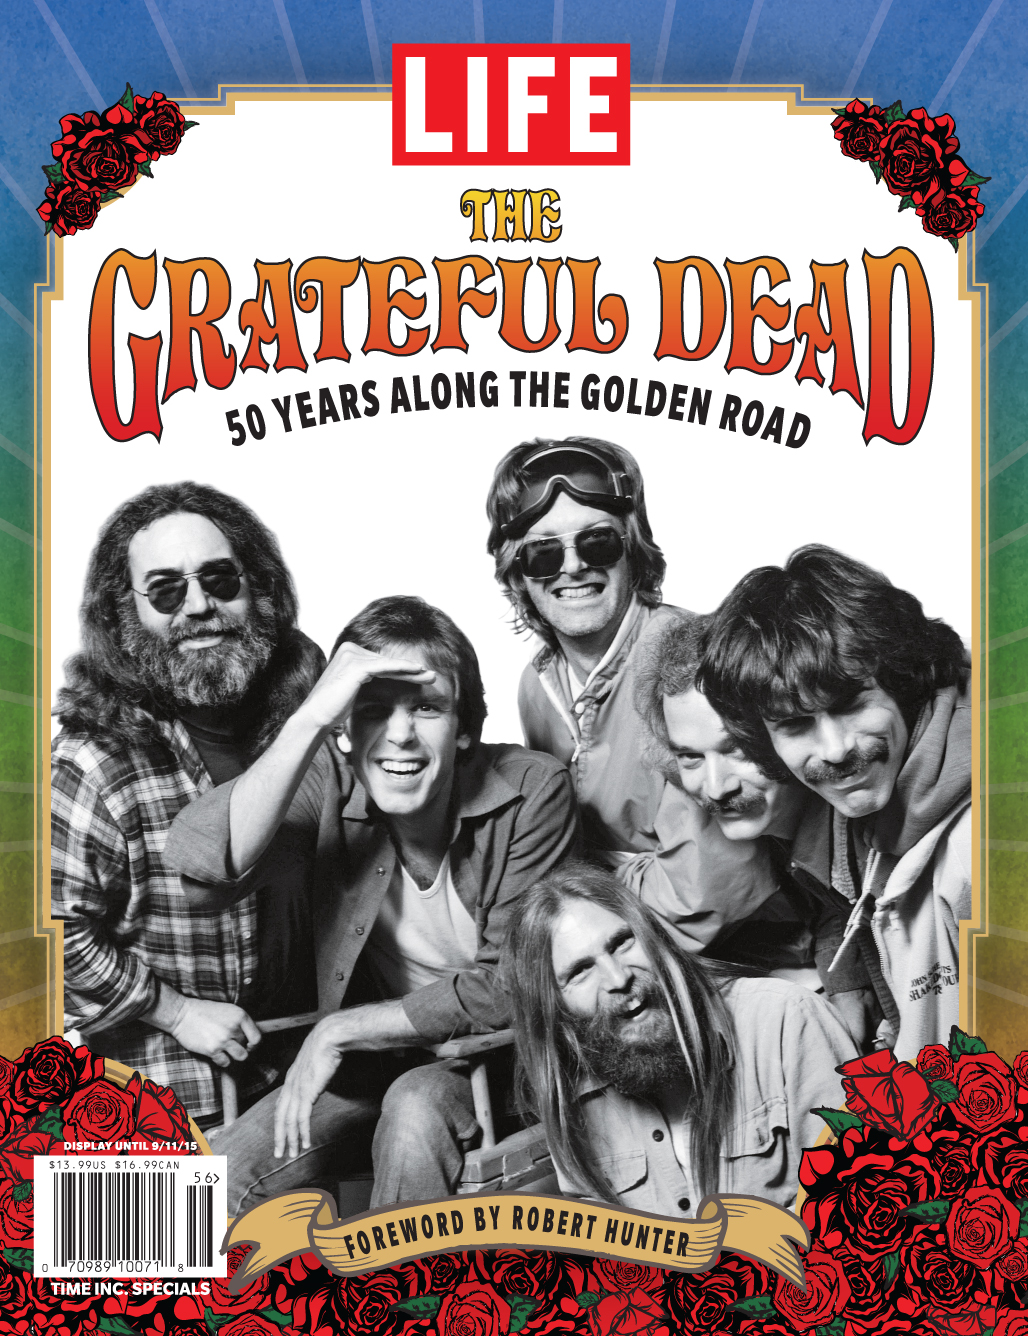 Grateful Dead book